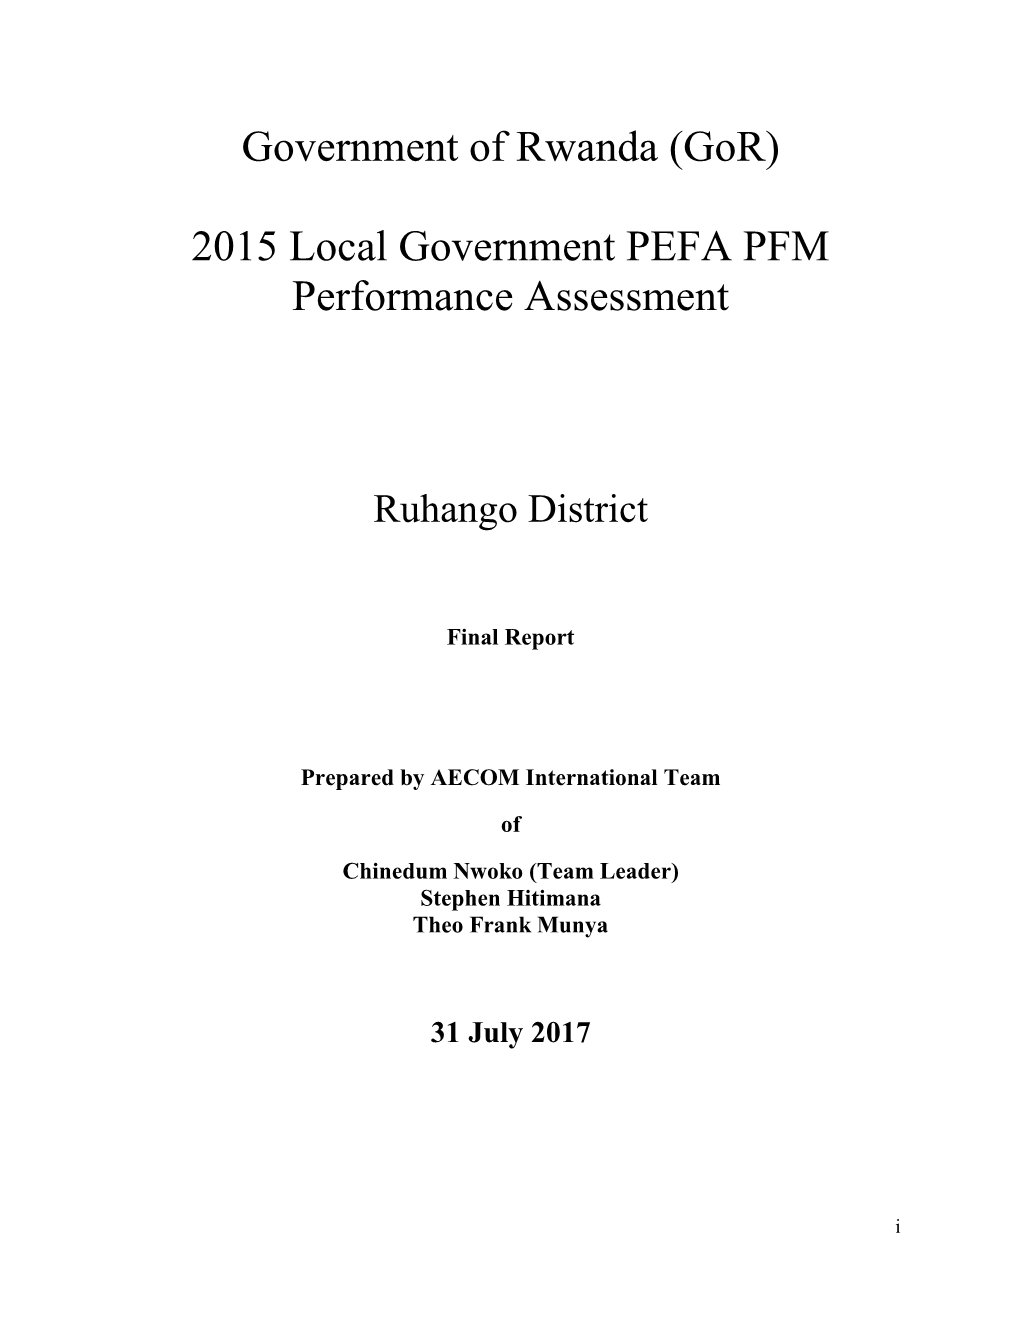 (Gor) 2015 Local Government PEFA PFM Performance Assessment